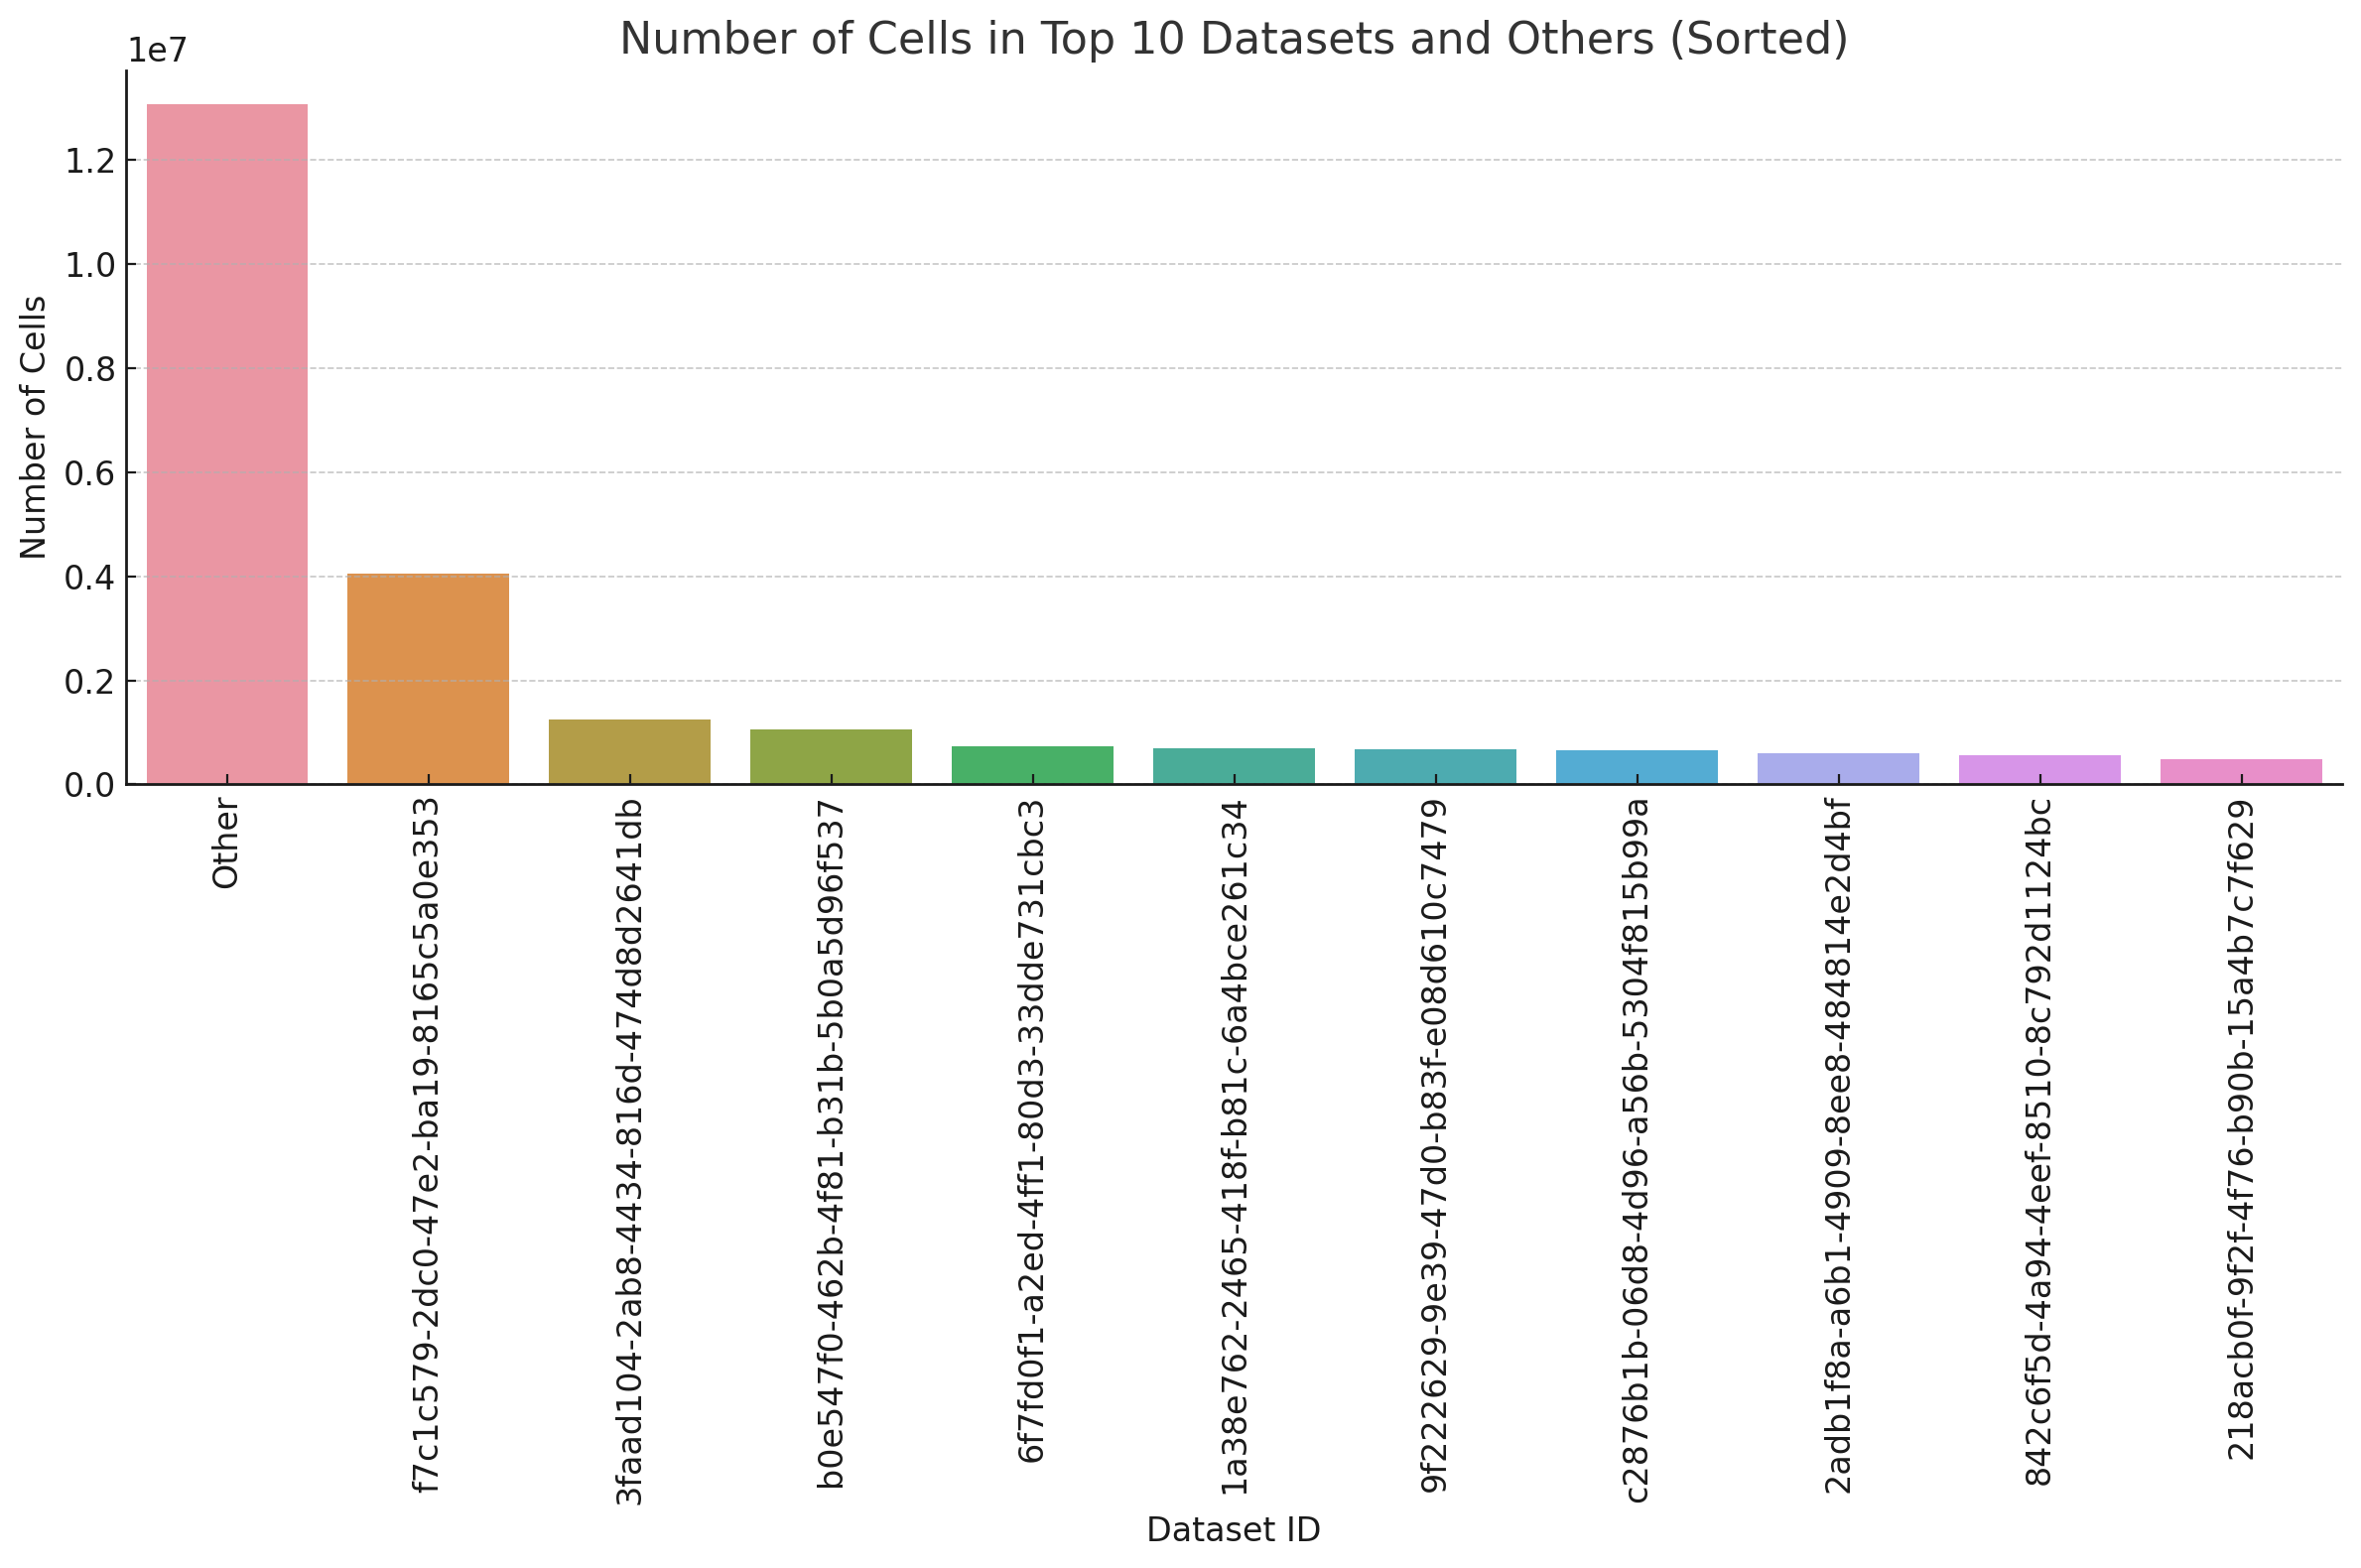 Top datasets make up a large fraction of cells